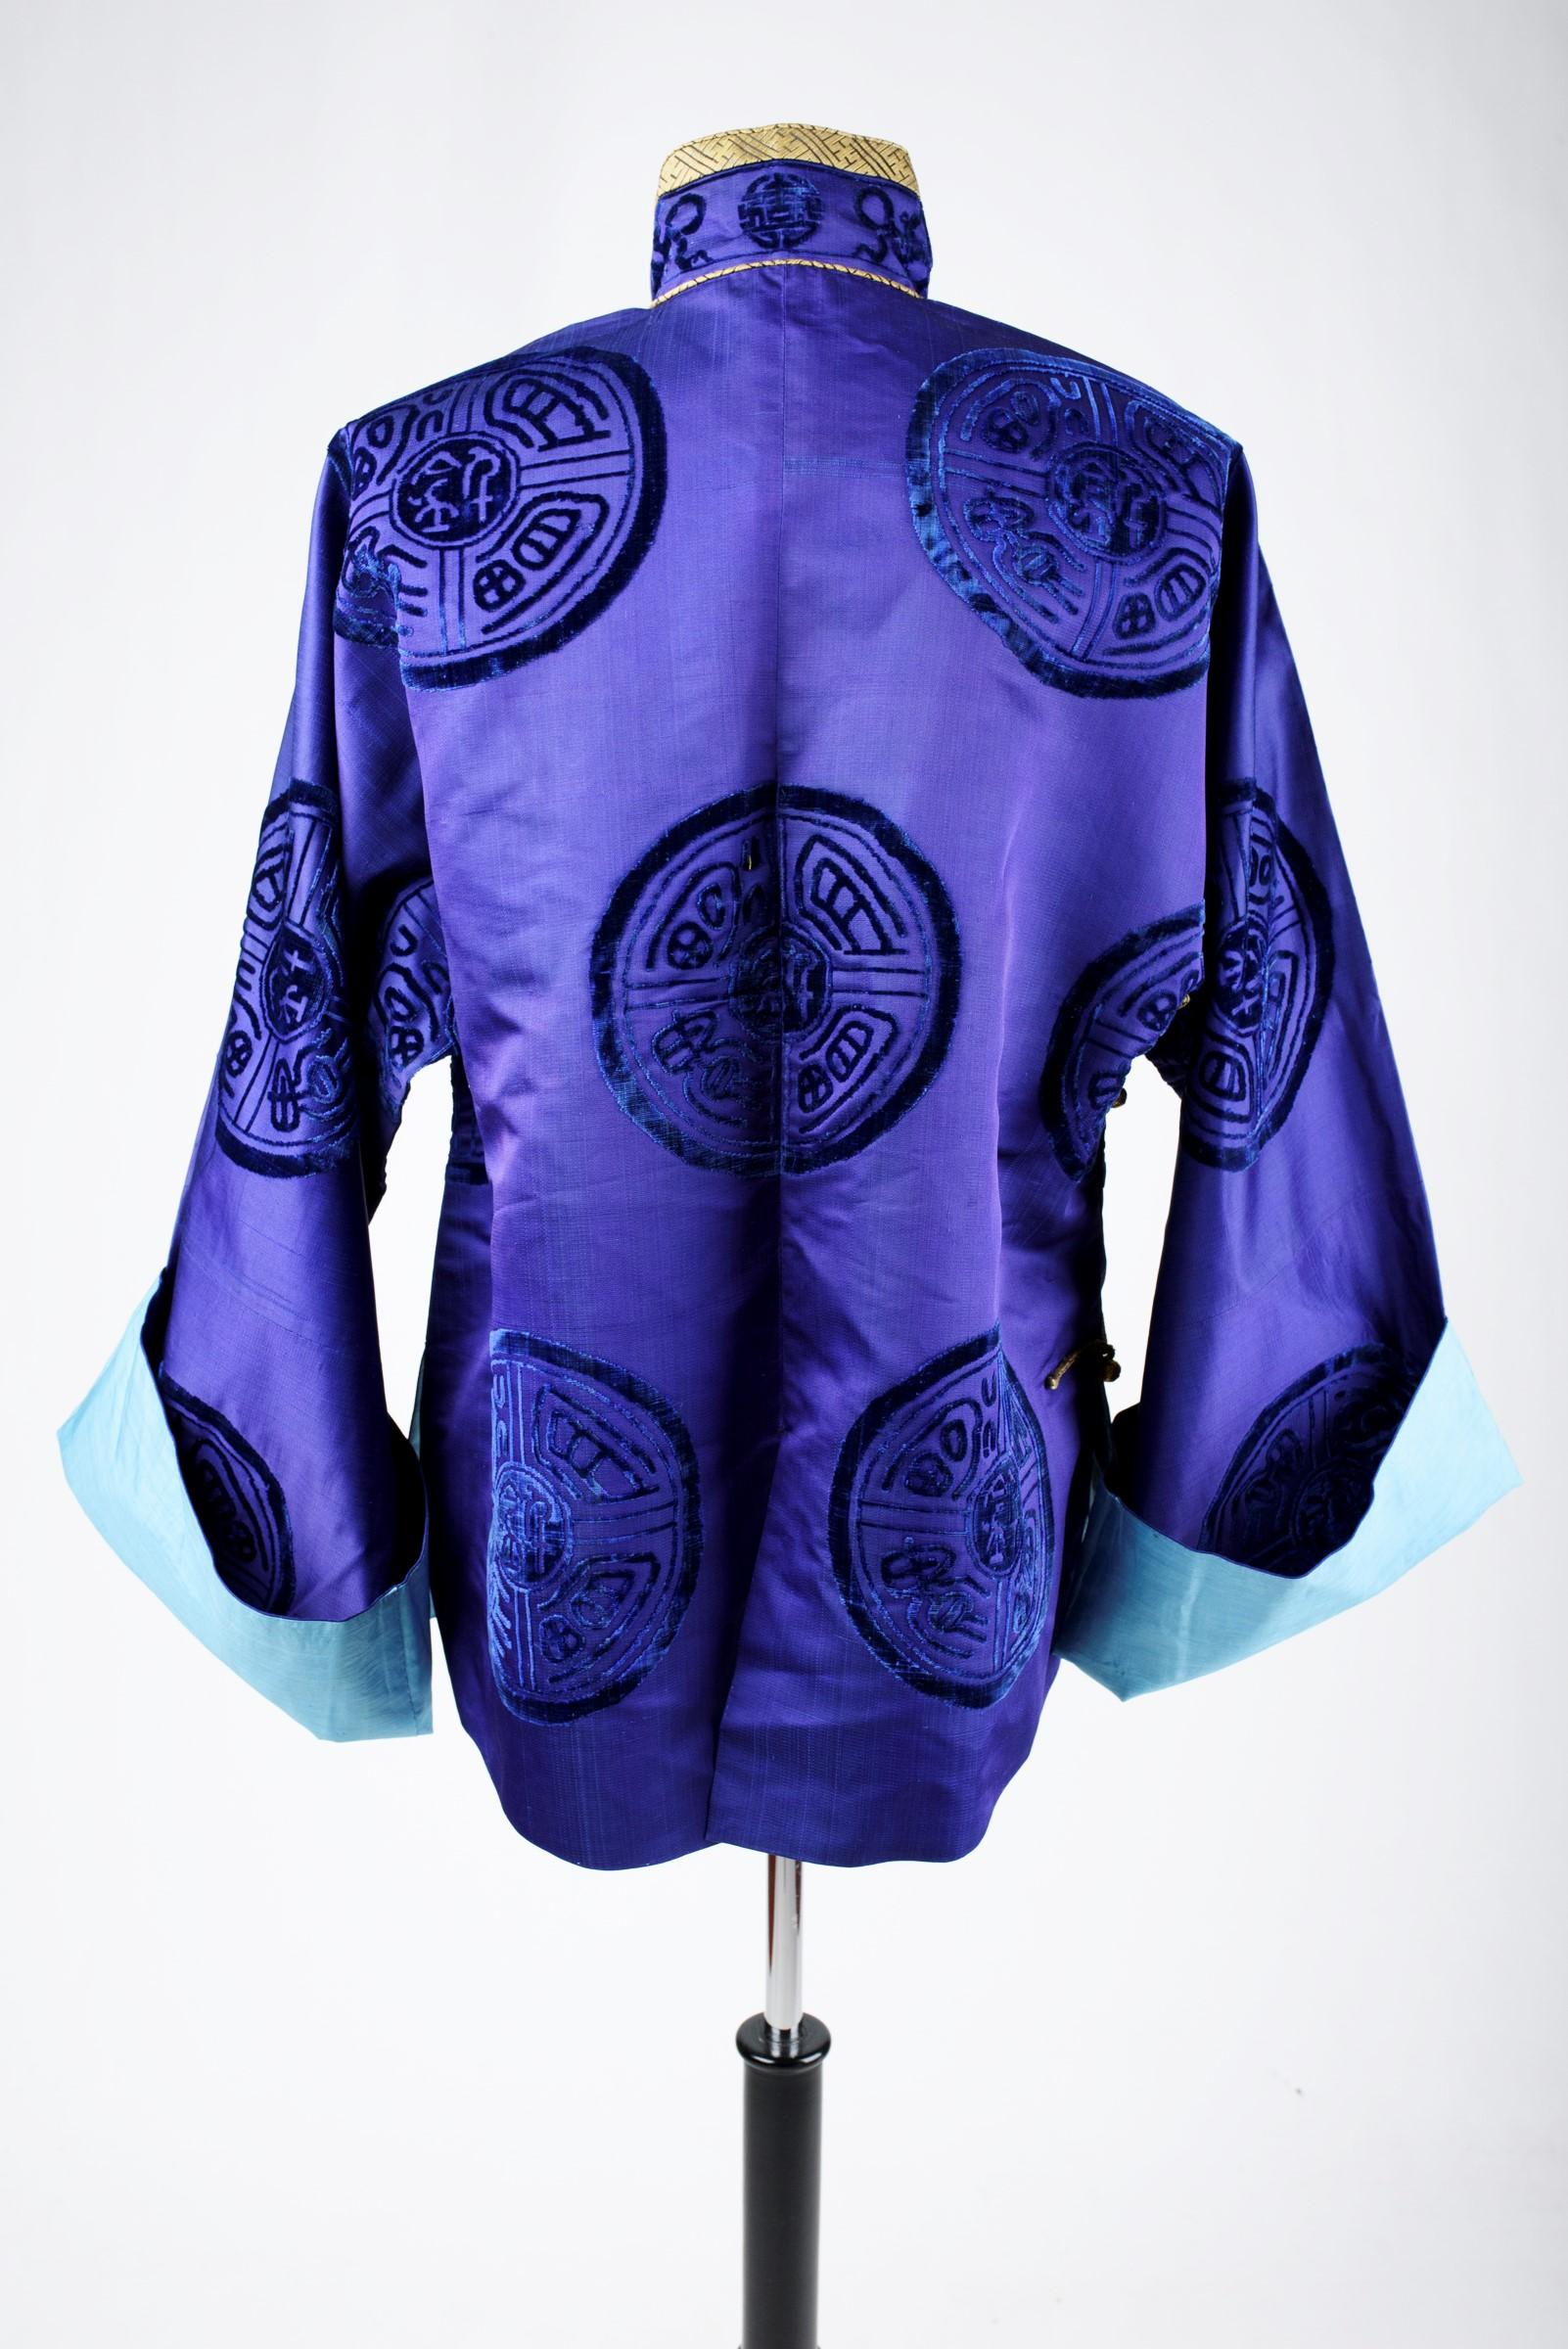 Velvet brocaded satin informal tunic - Soviet Republic of China Circa 1930-1940 4